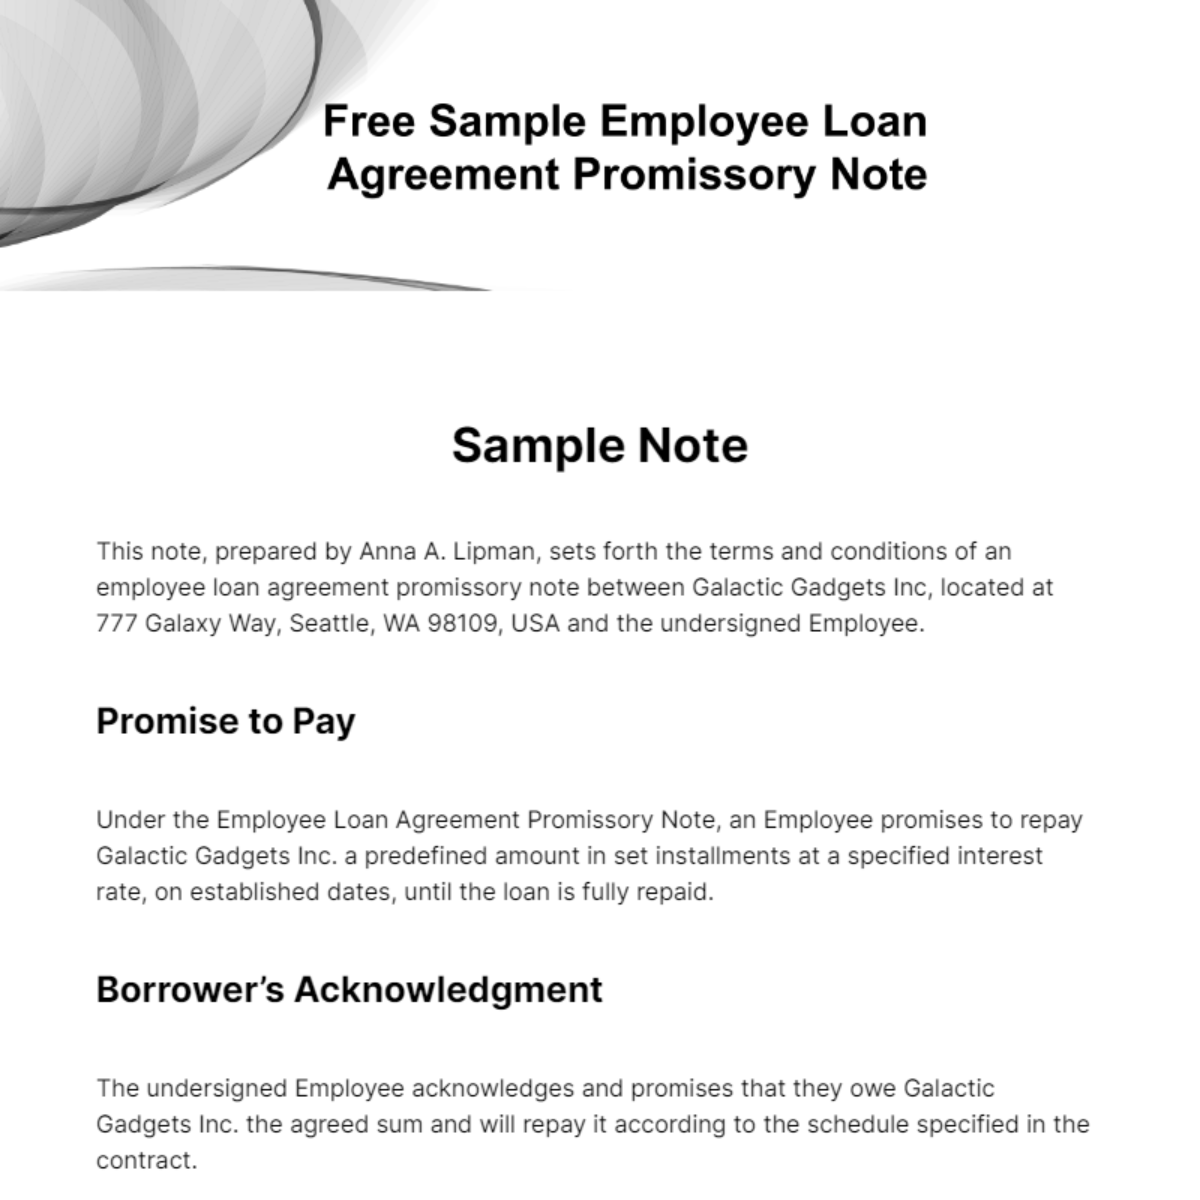 Sample Employee Loan Agreement Promissory Note Template